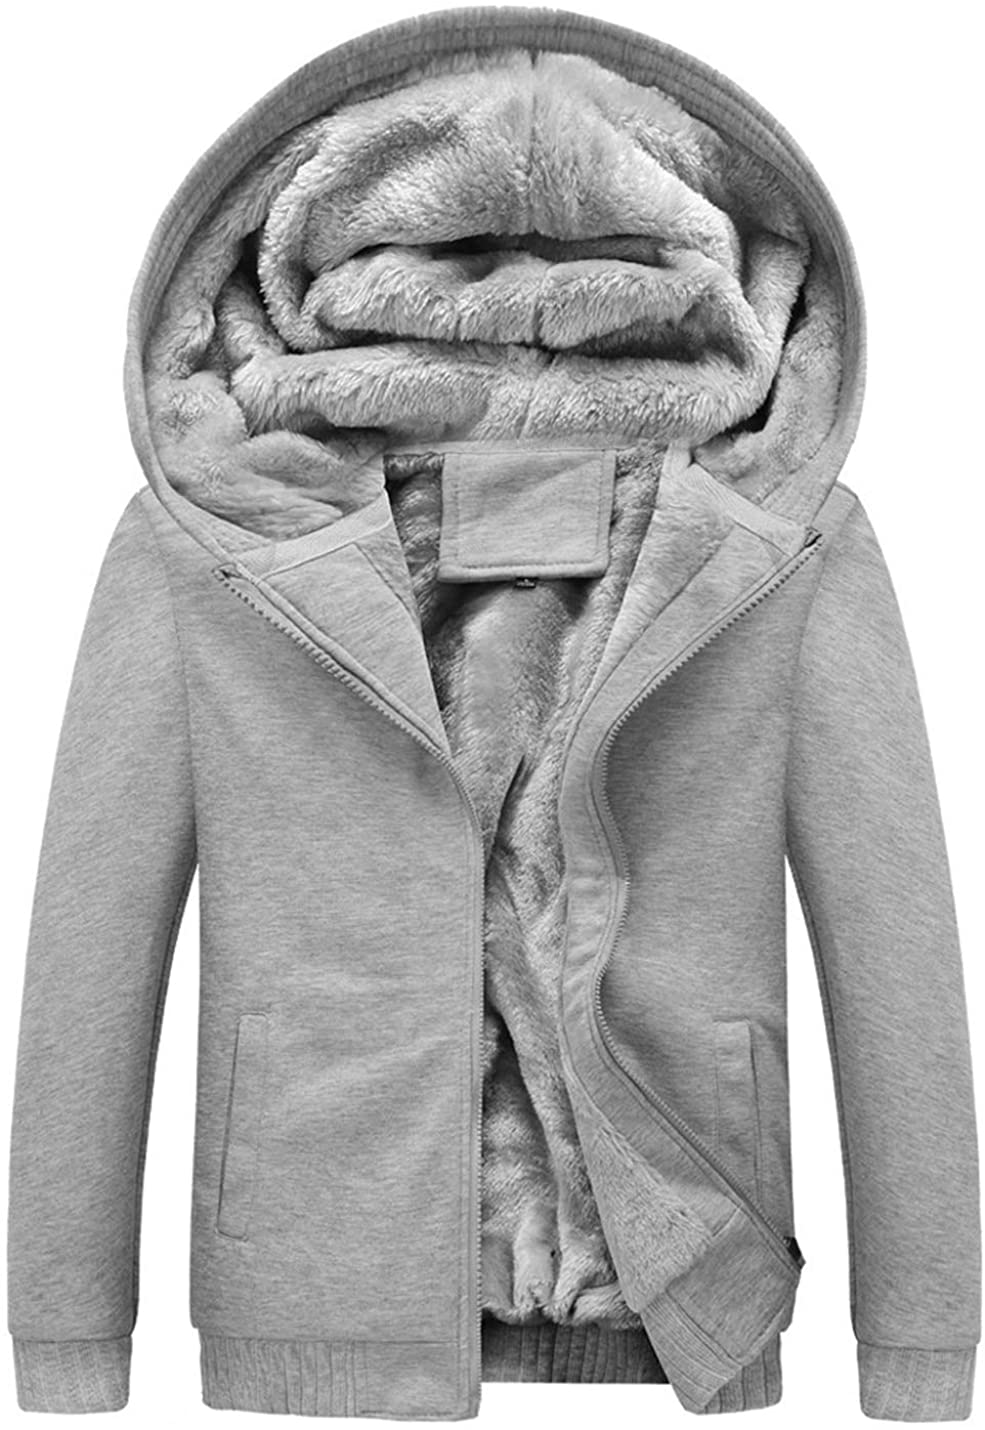 Yimoon Womens Fleece Hooded Jacket Warm Winter Coat 